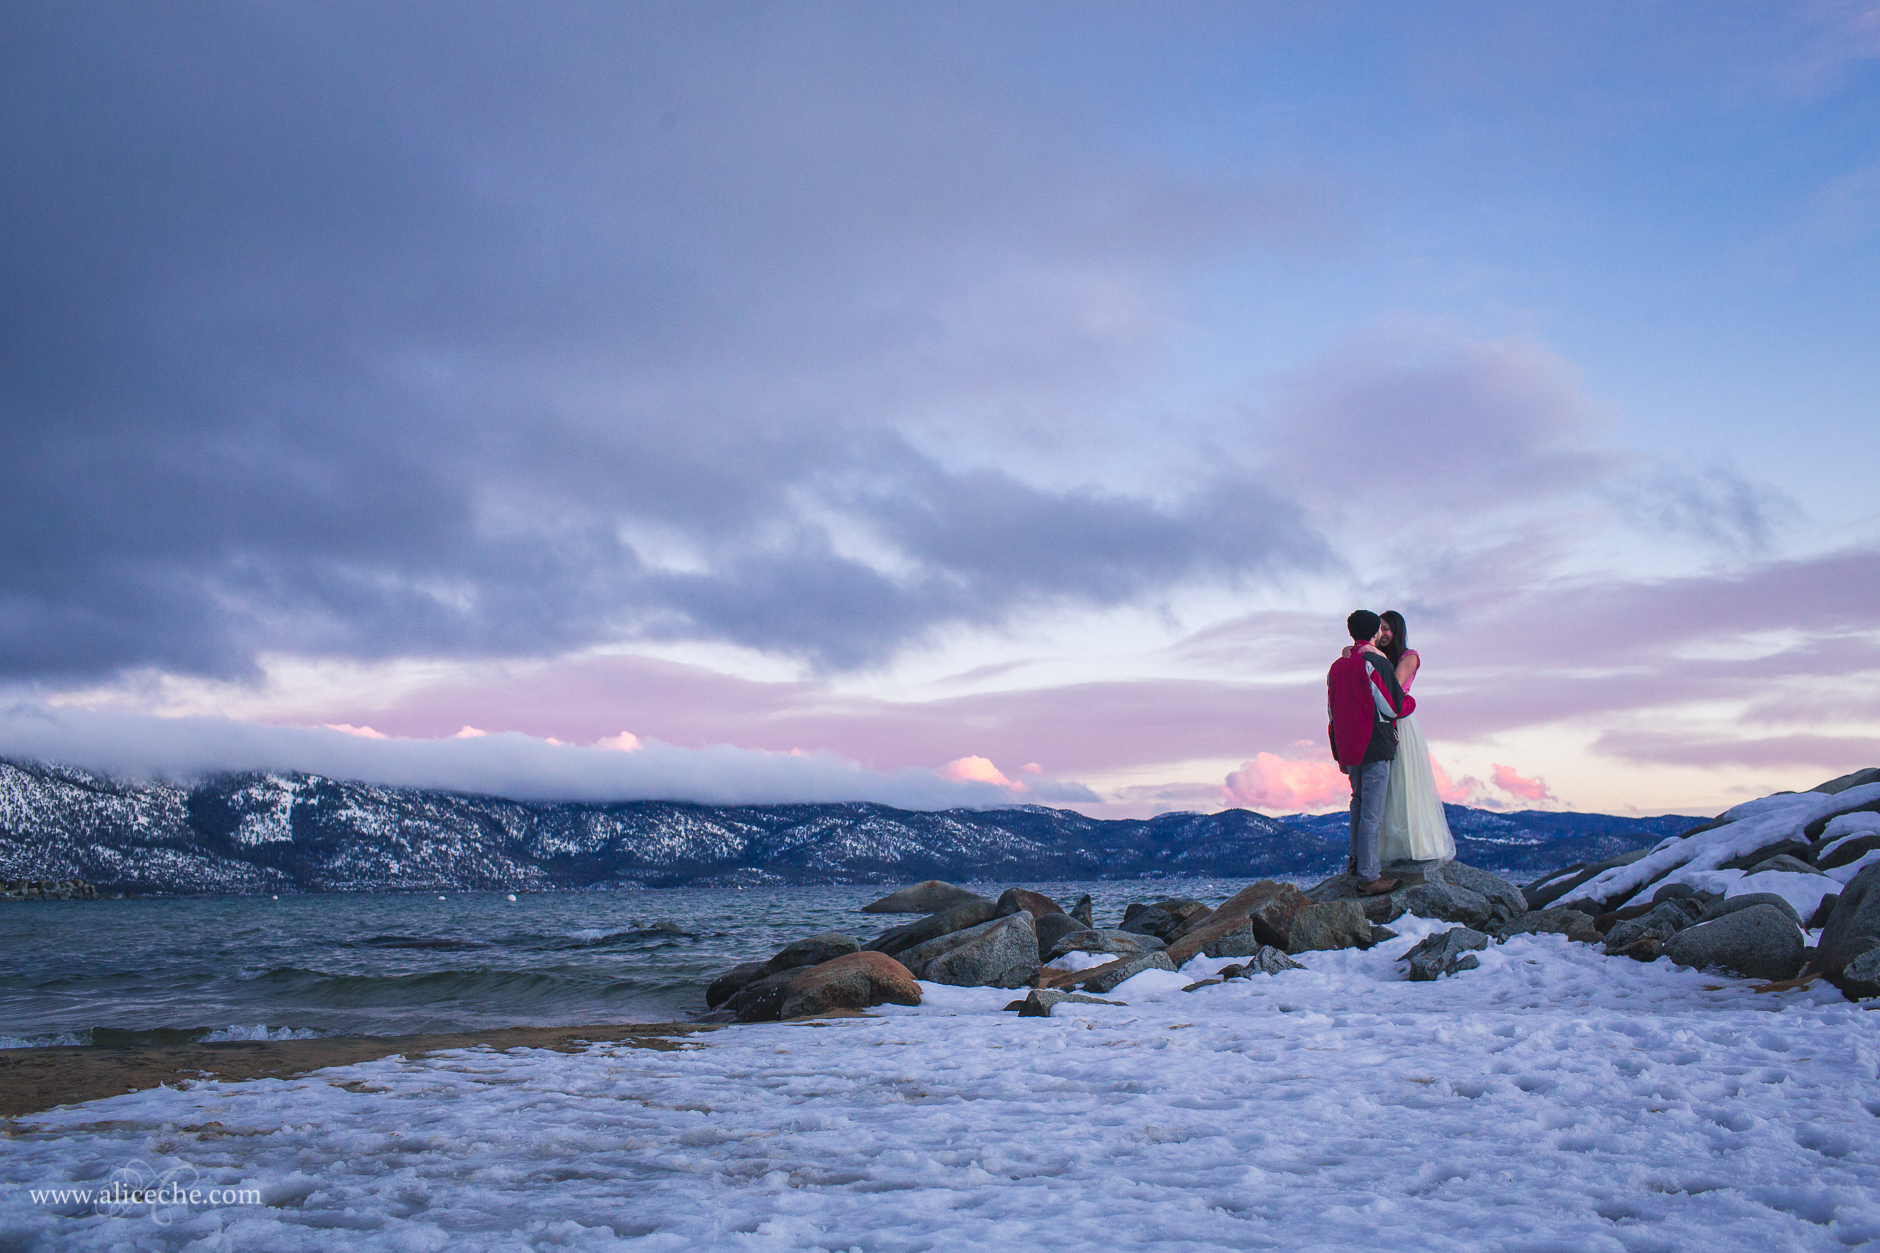 alice-che-photography-lake-tahoe-self-portrait-sunset-couple-on-rocks